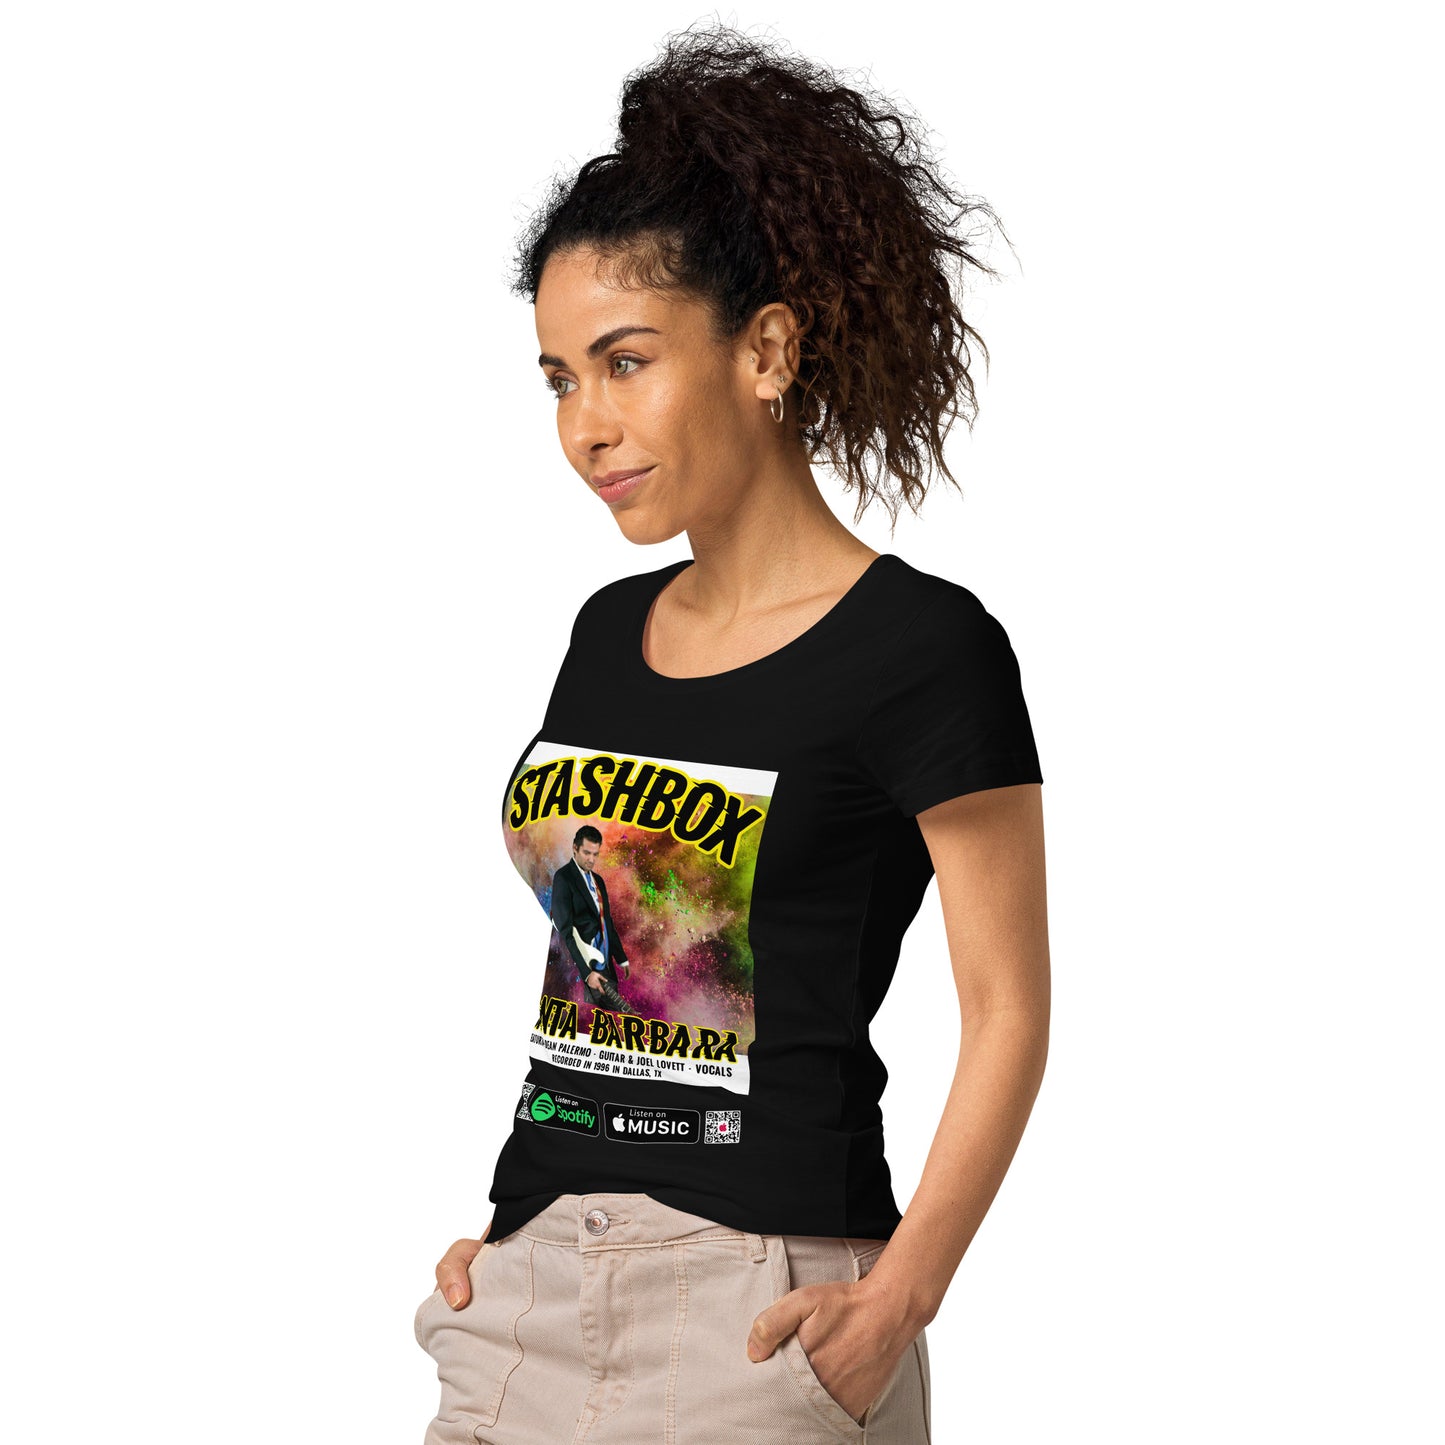 Santa Barbara Serenity: Stashbox Women’s Basic Organic T-Shirt - Design #025. Natural vibes, exclusively at Stashbox.ai.